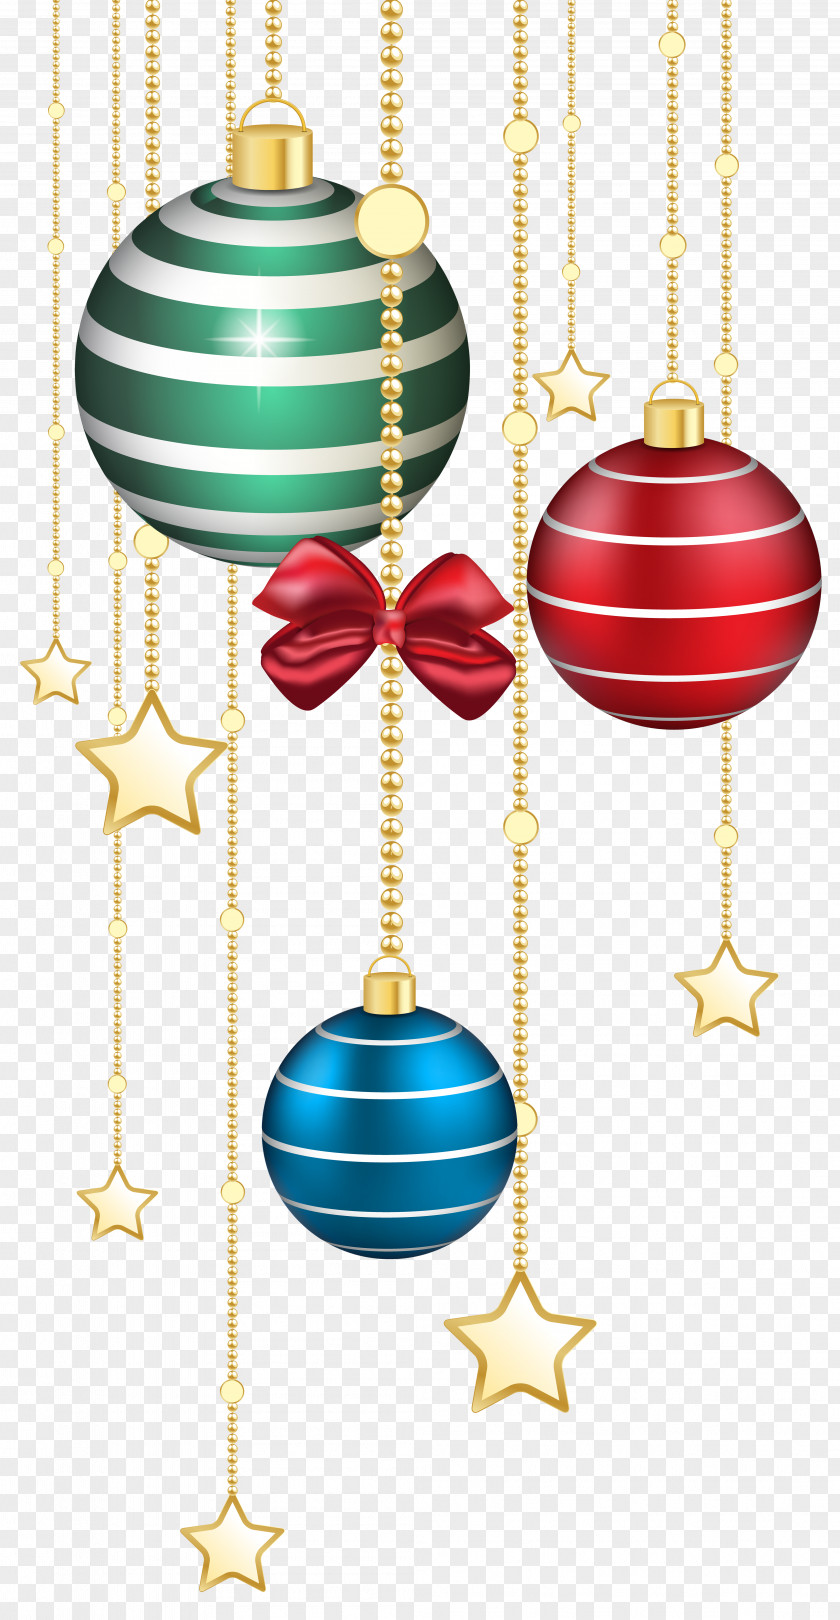 Christmas Balls Decor Transparent Image Ornament Day Icon Clip Art PNG